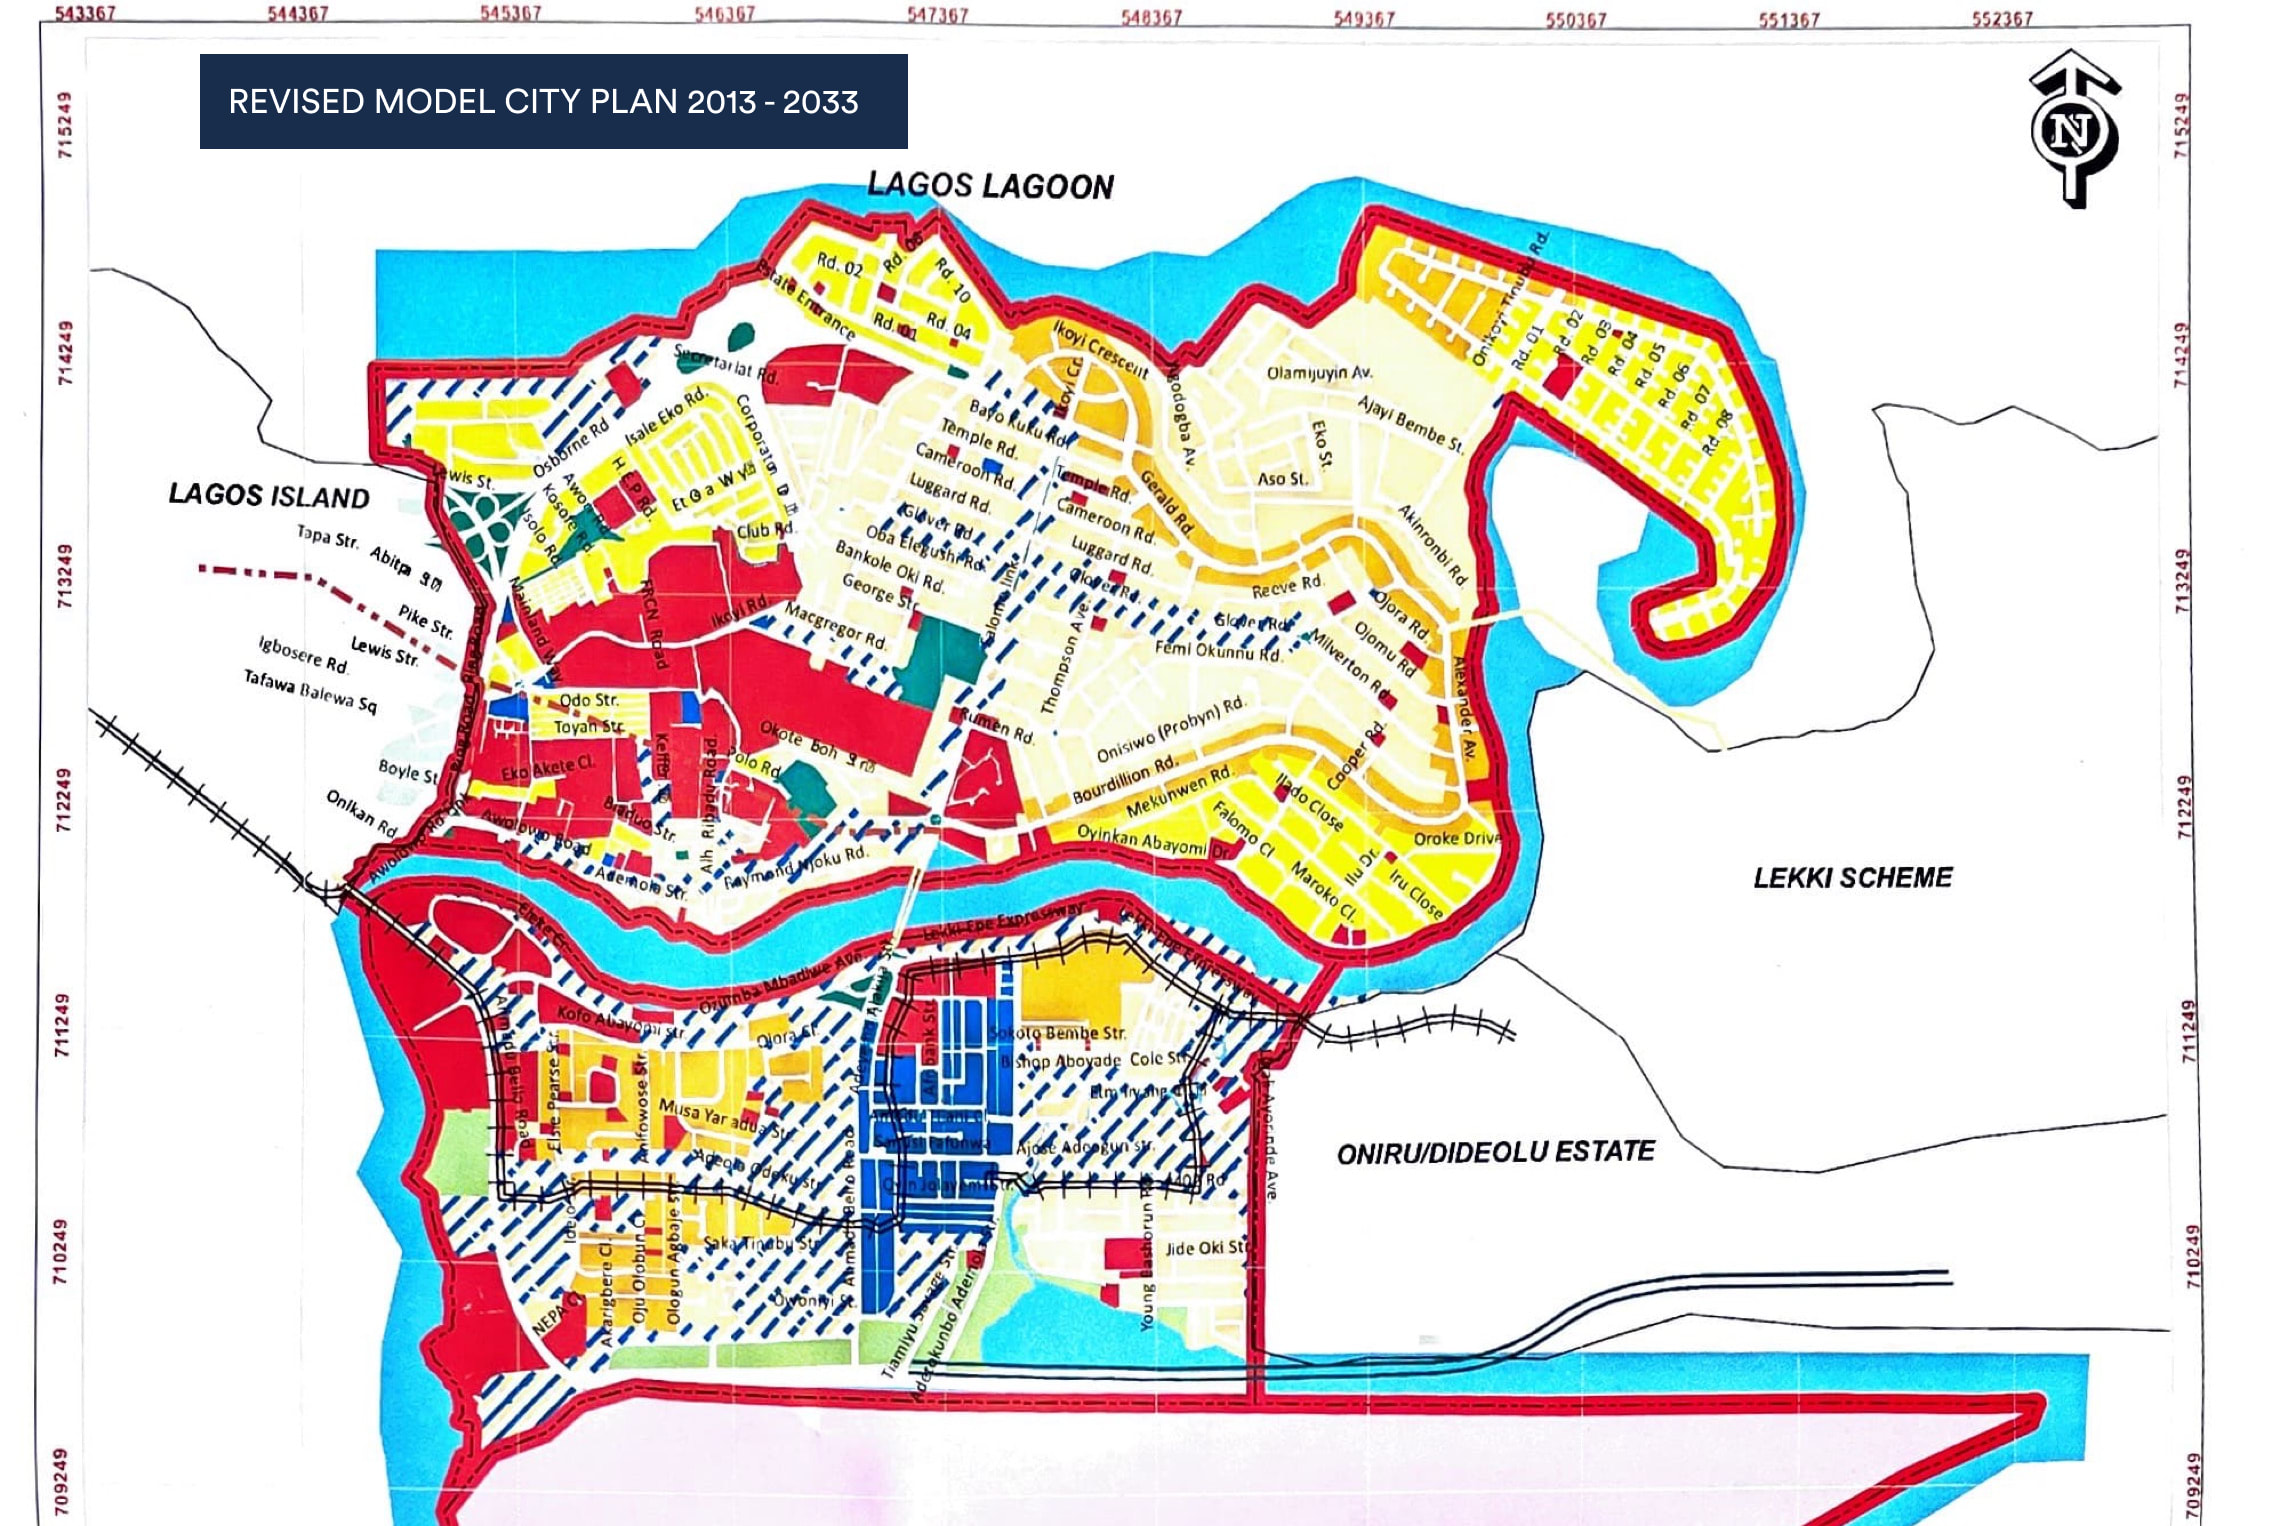 Revised Model City Plan for Ikoyi - Victoria Island Model City Plan between 2013 - 2033